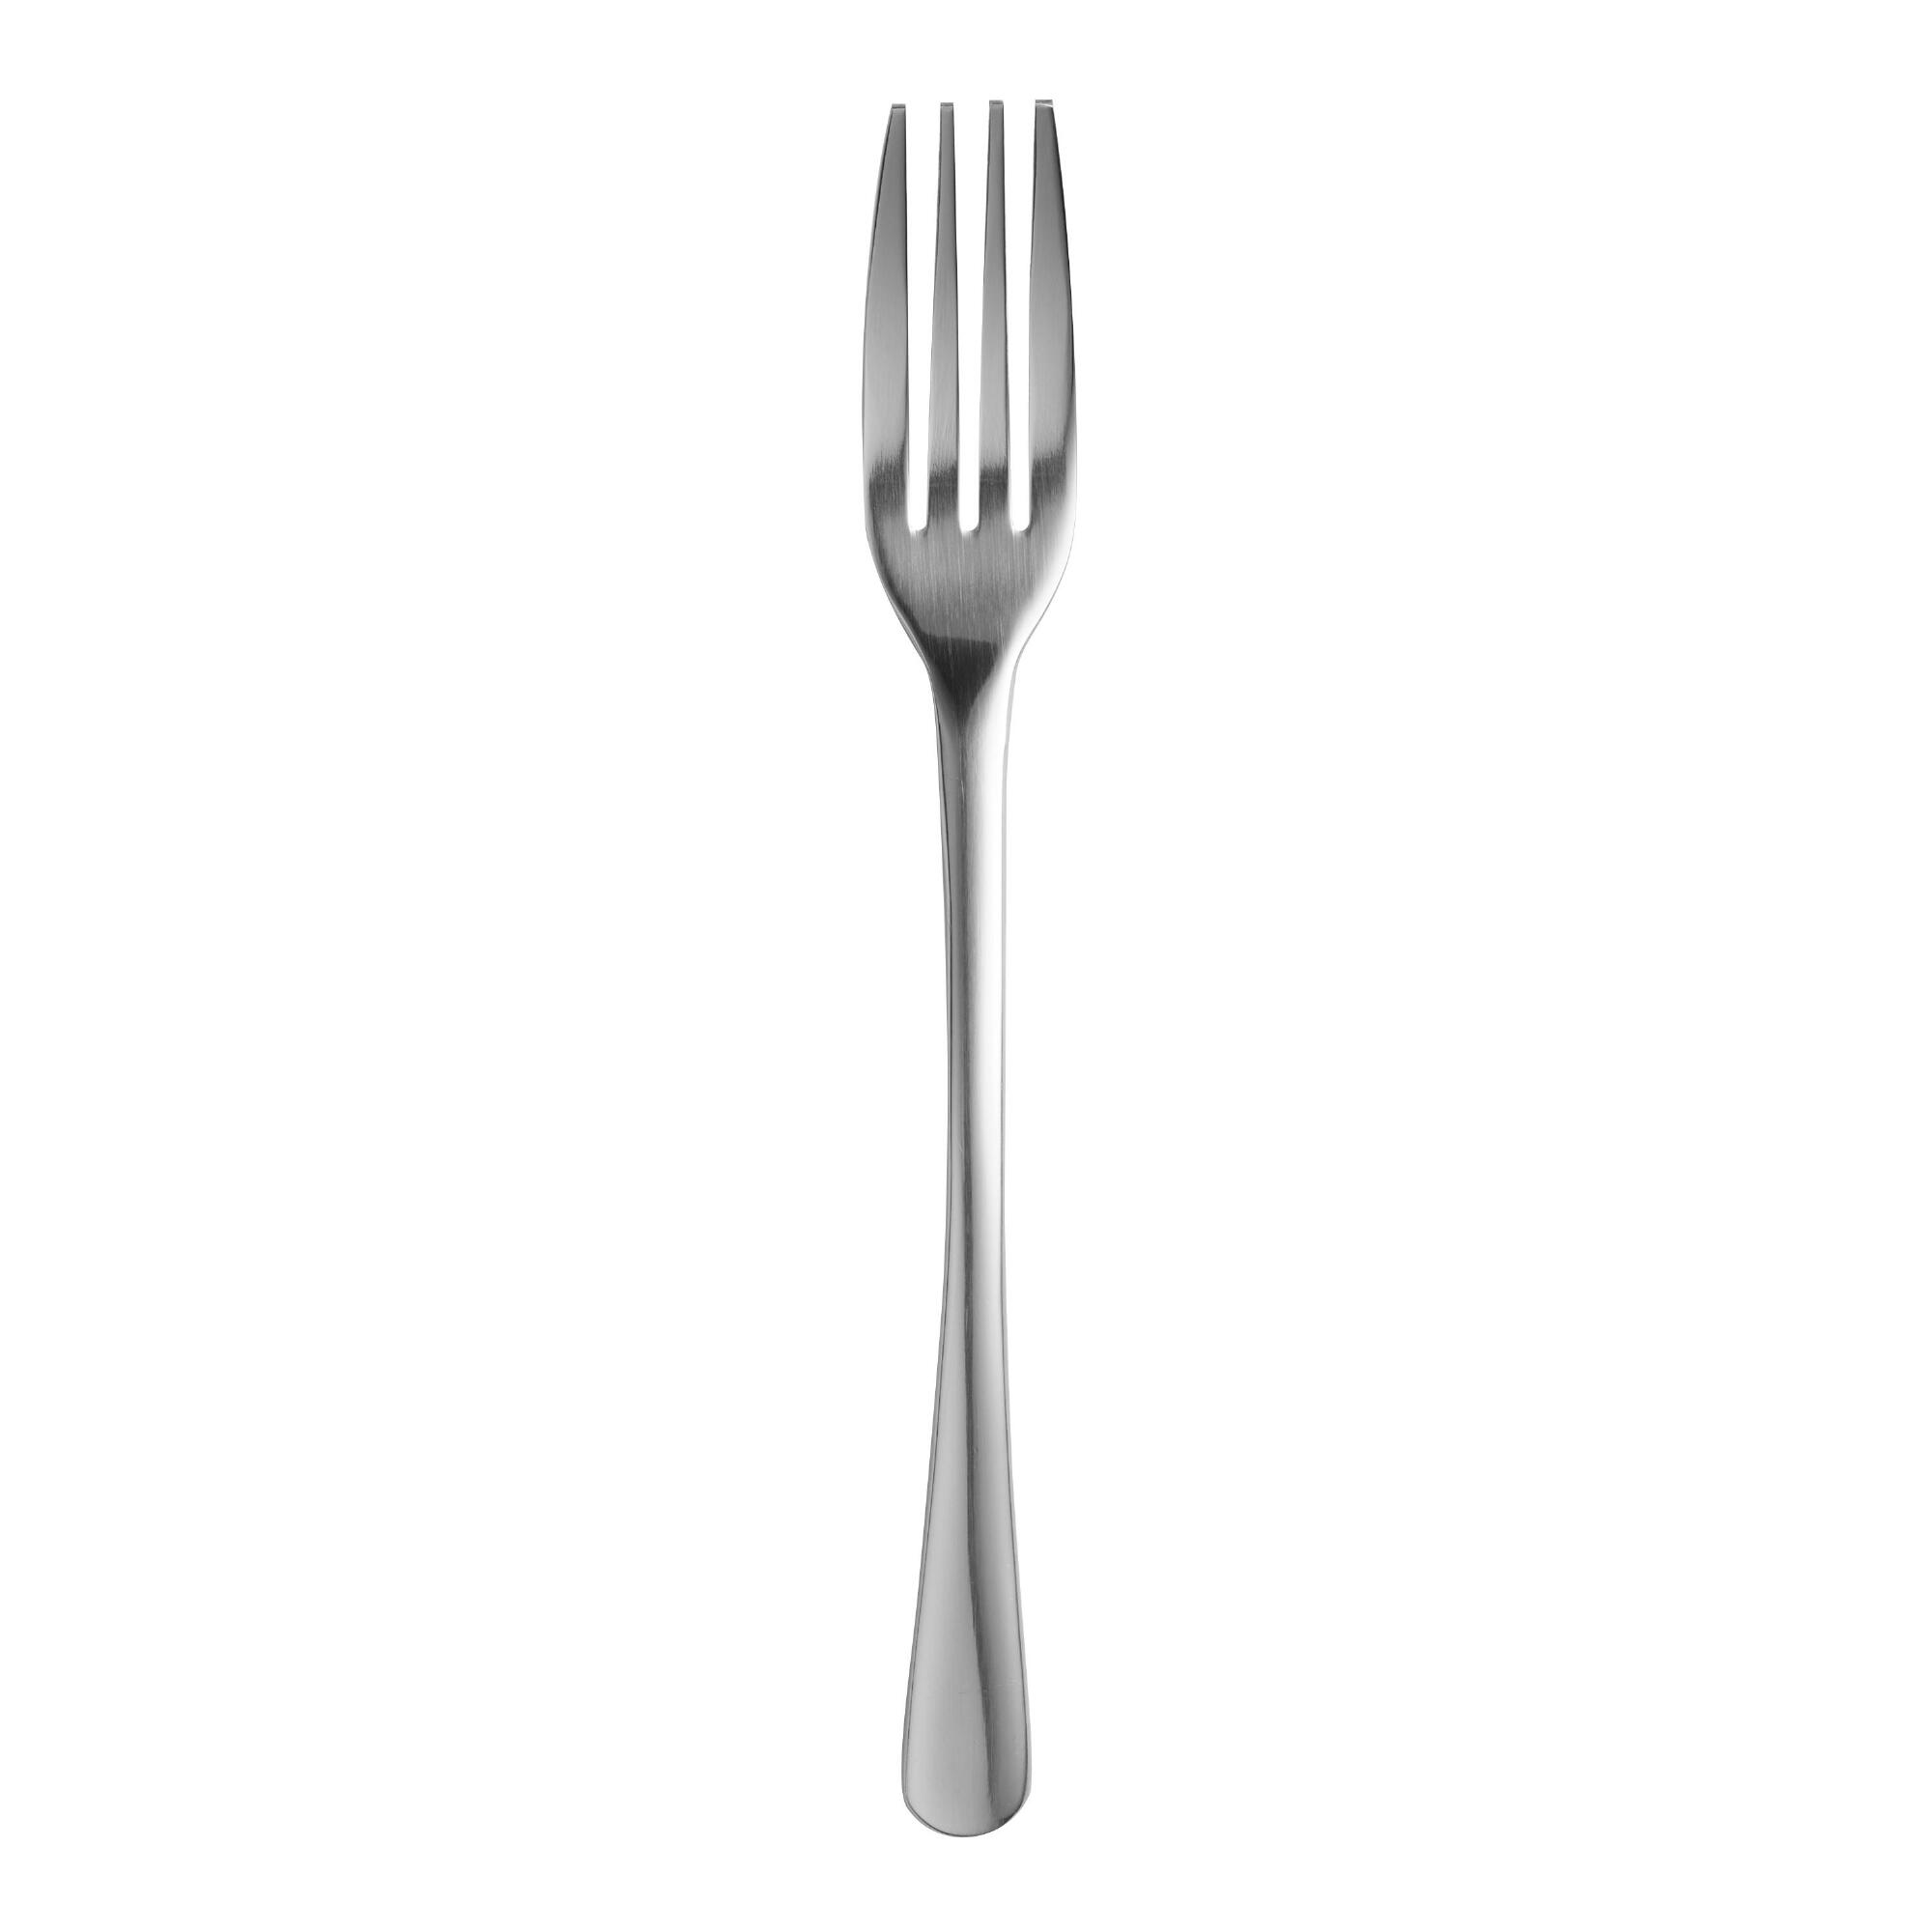 Teardrop Dinner Forks Set of 6: Silver - Stainless Steel by World Market